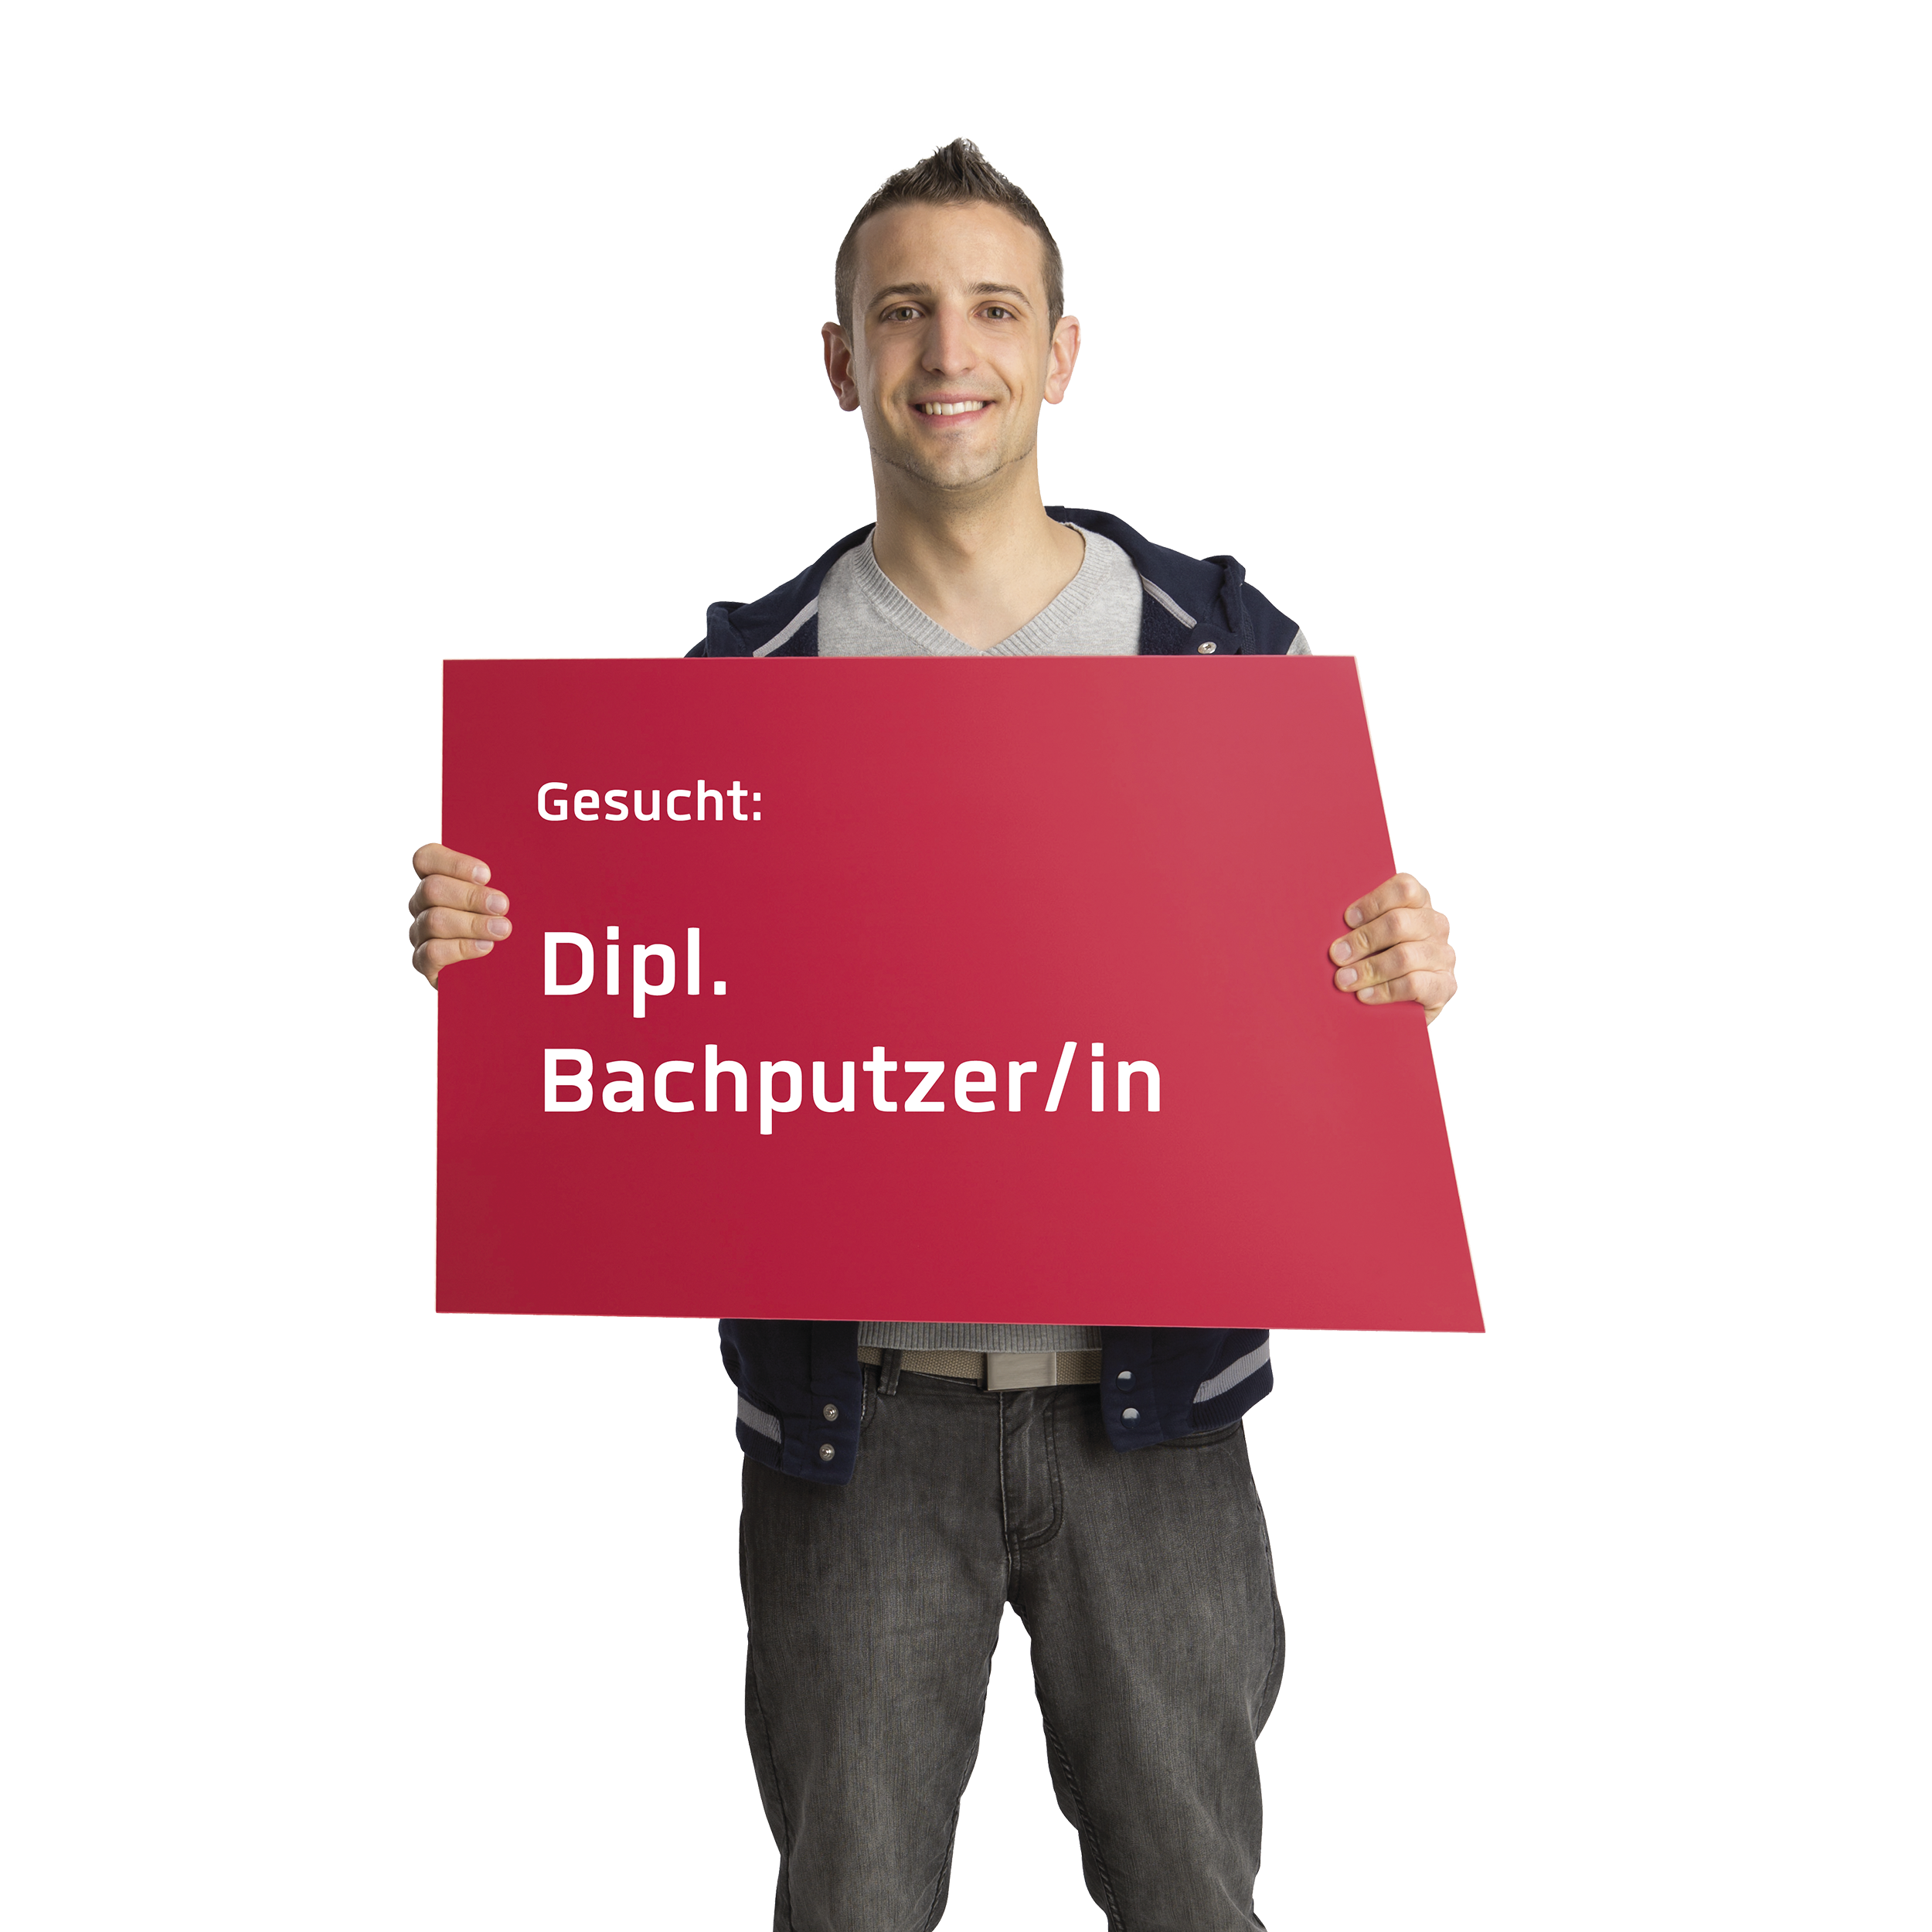 Dipl. Bachputzer/in